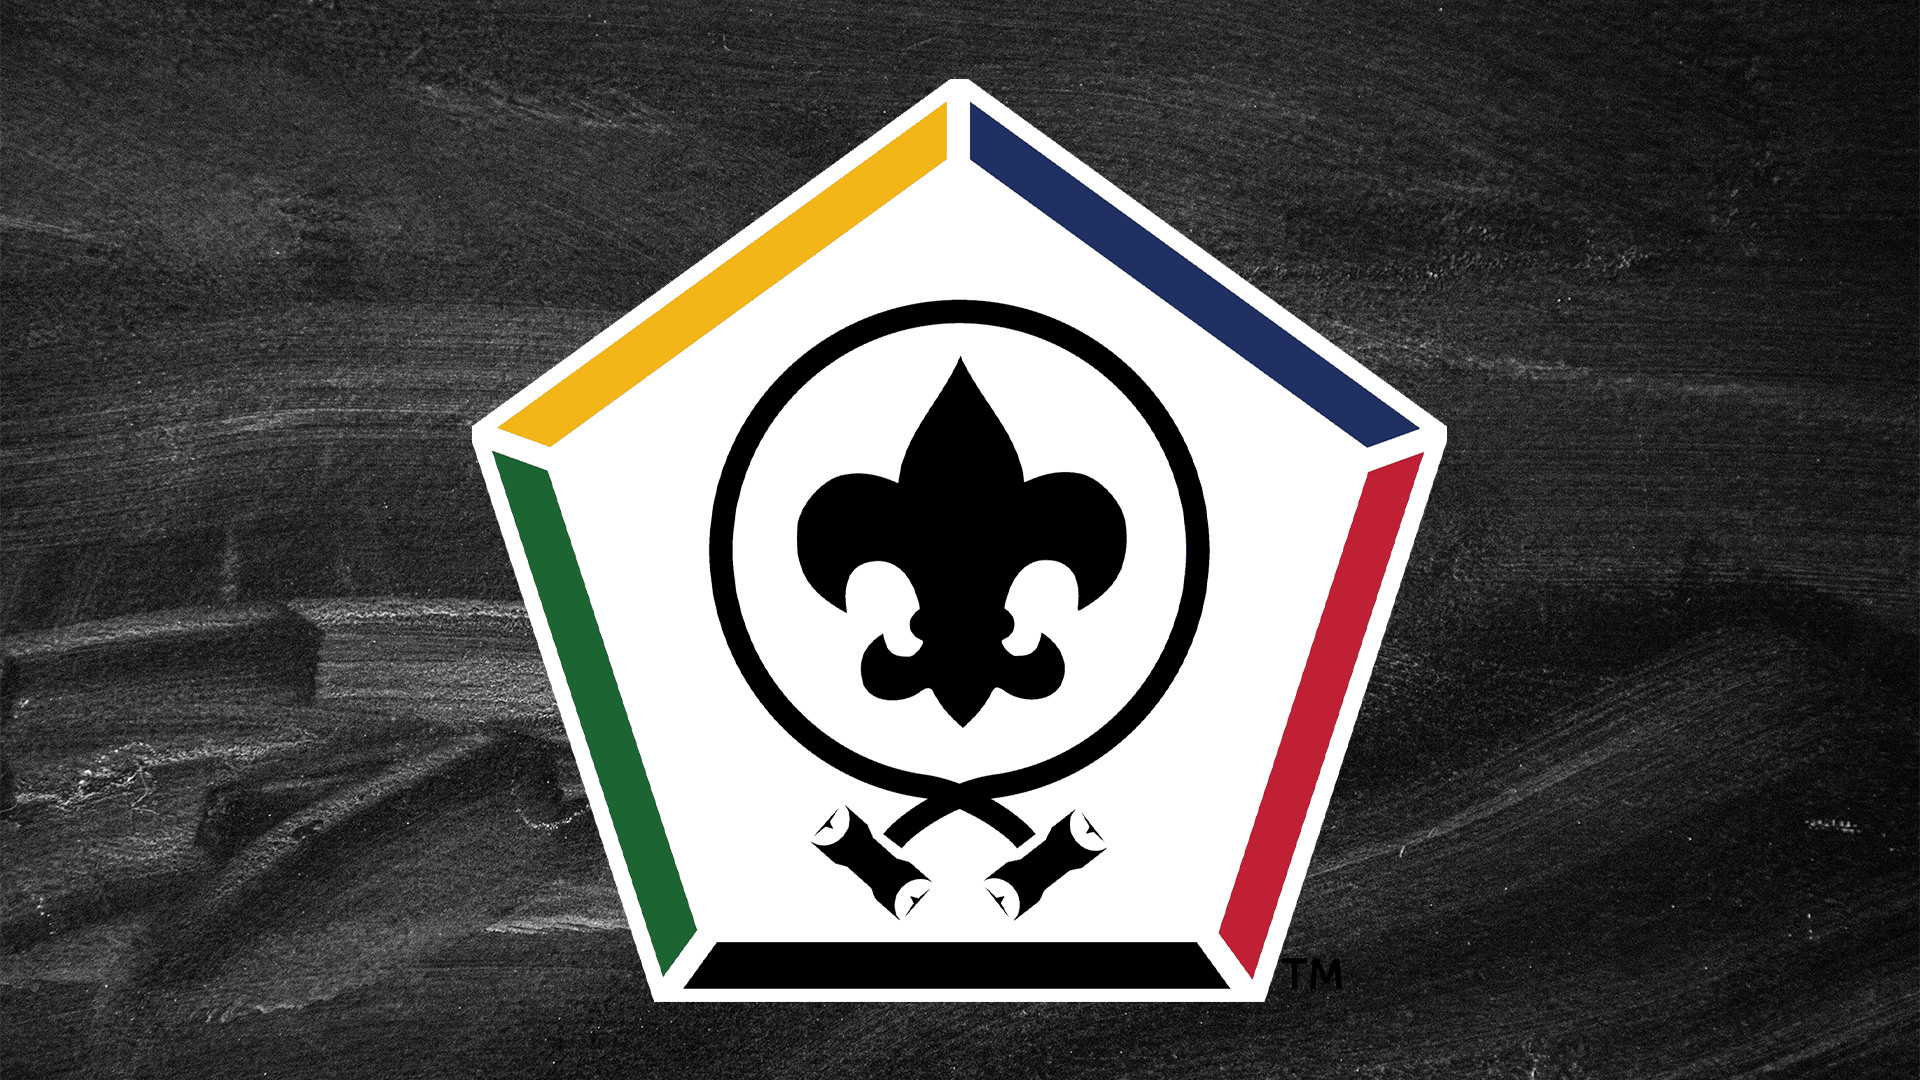 The Wood Badge logo, a Fleur de Lis in a pentagon with each side having a different color 